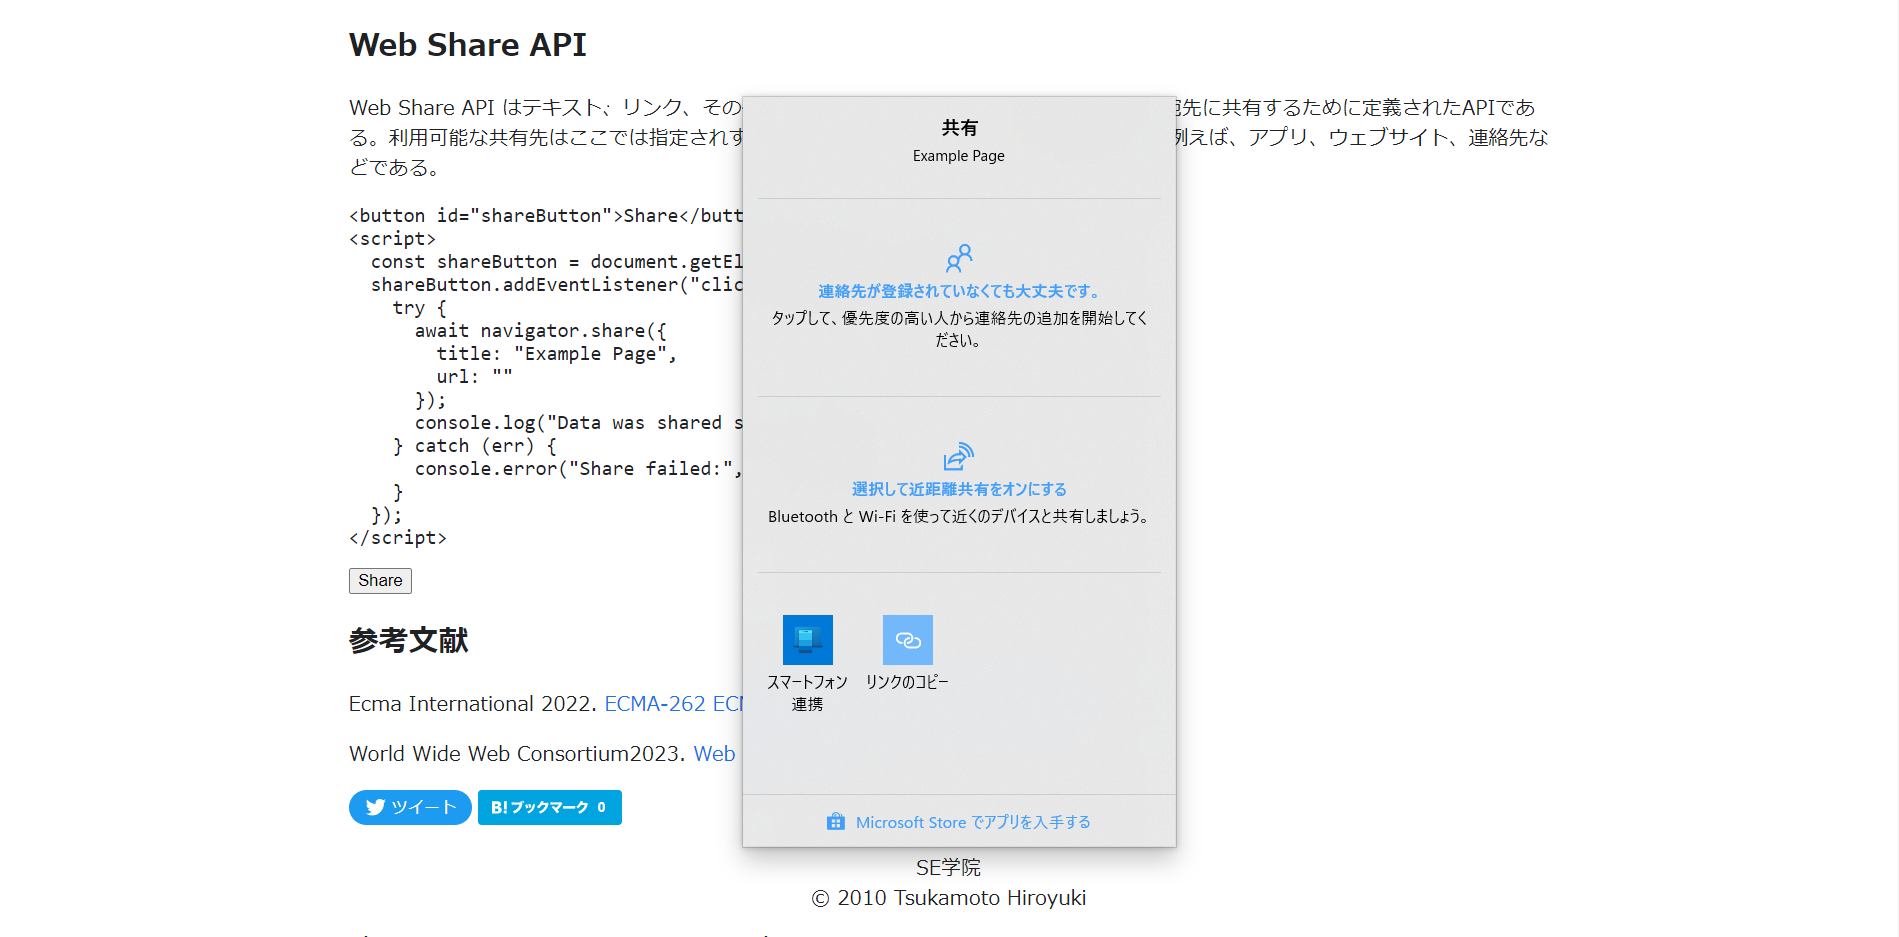 Web Share API on Windows